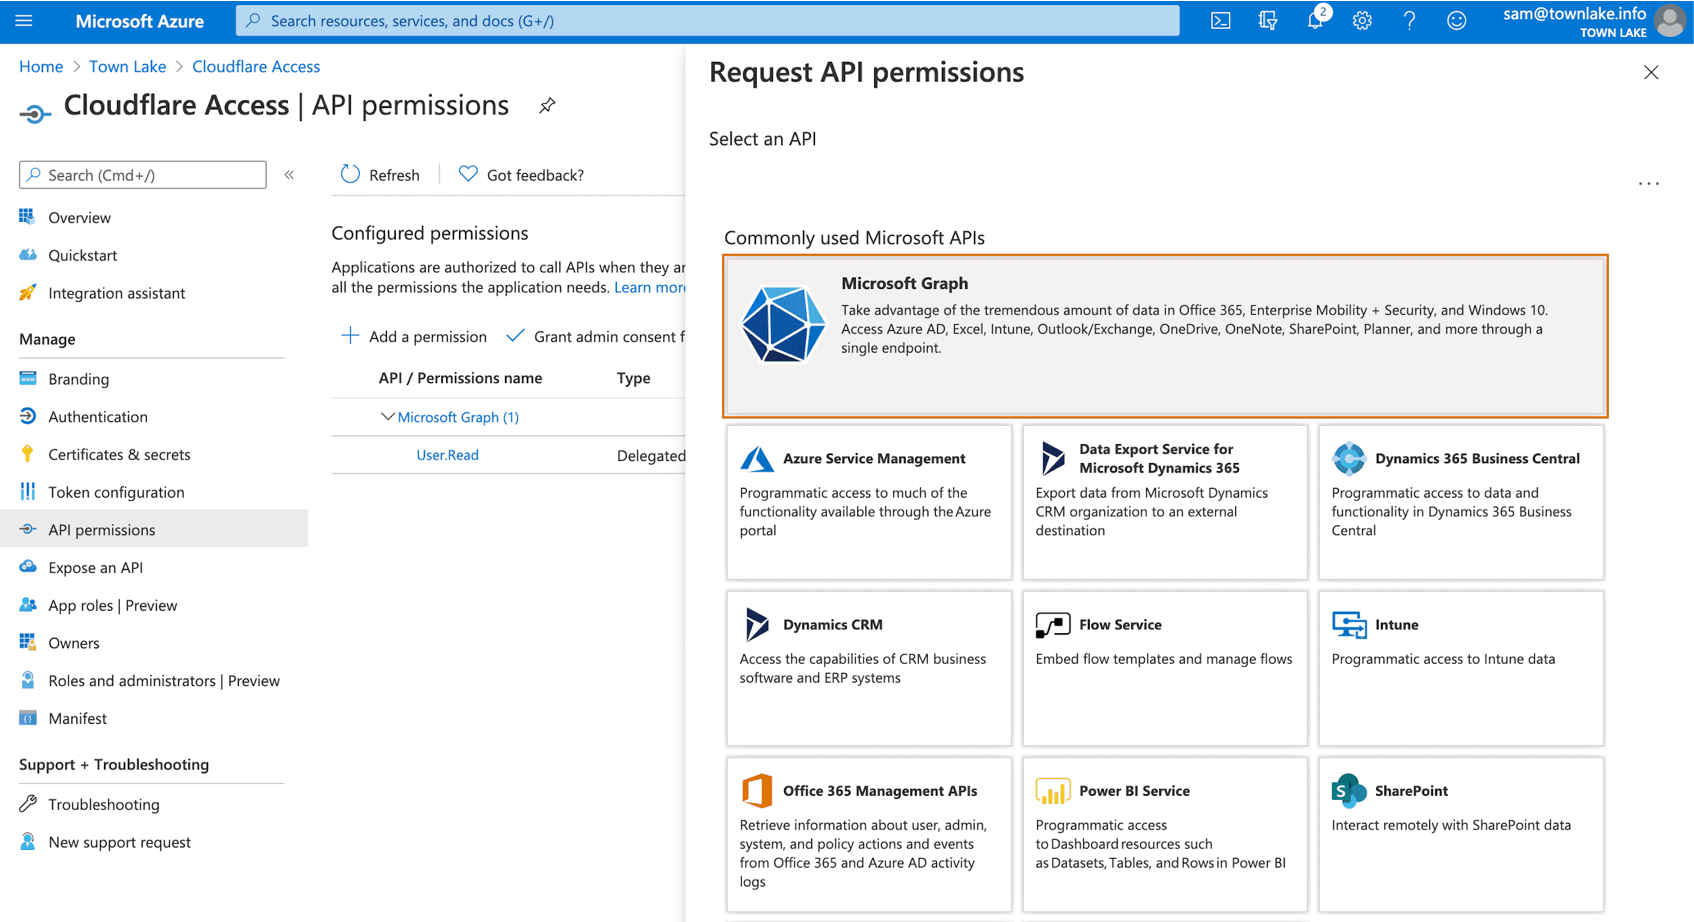 Screenshot of the Microsoft Graph option under Request API permissions.